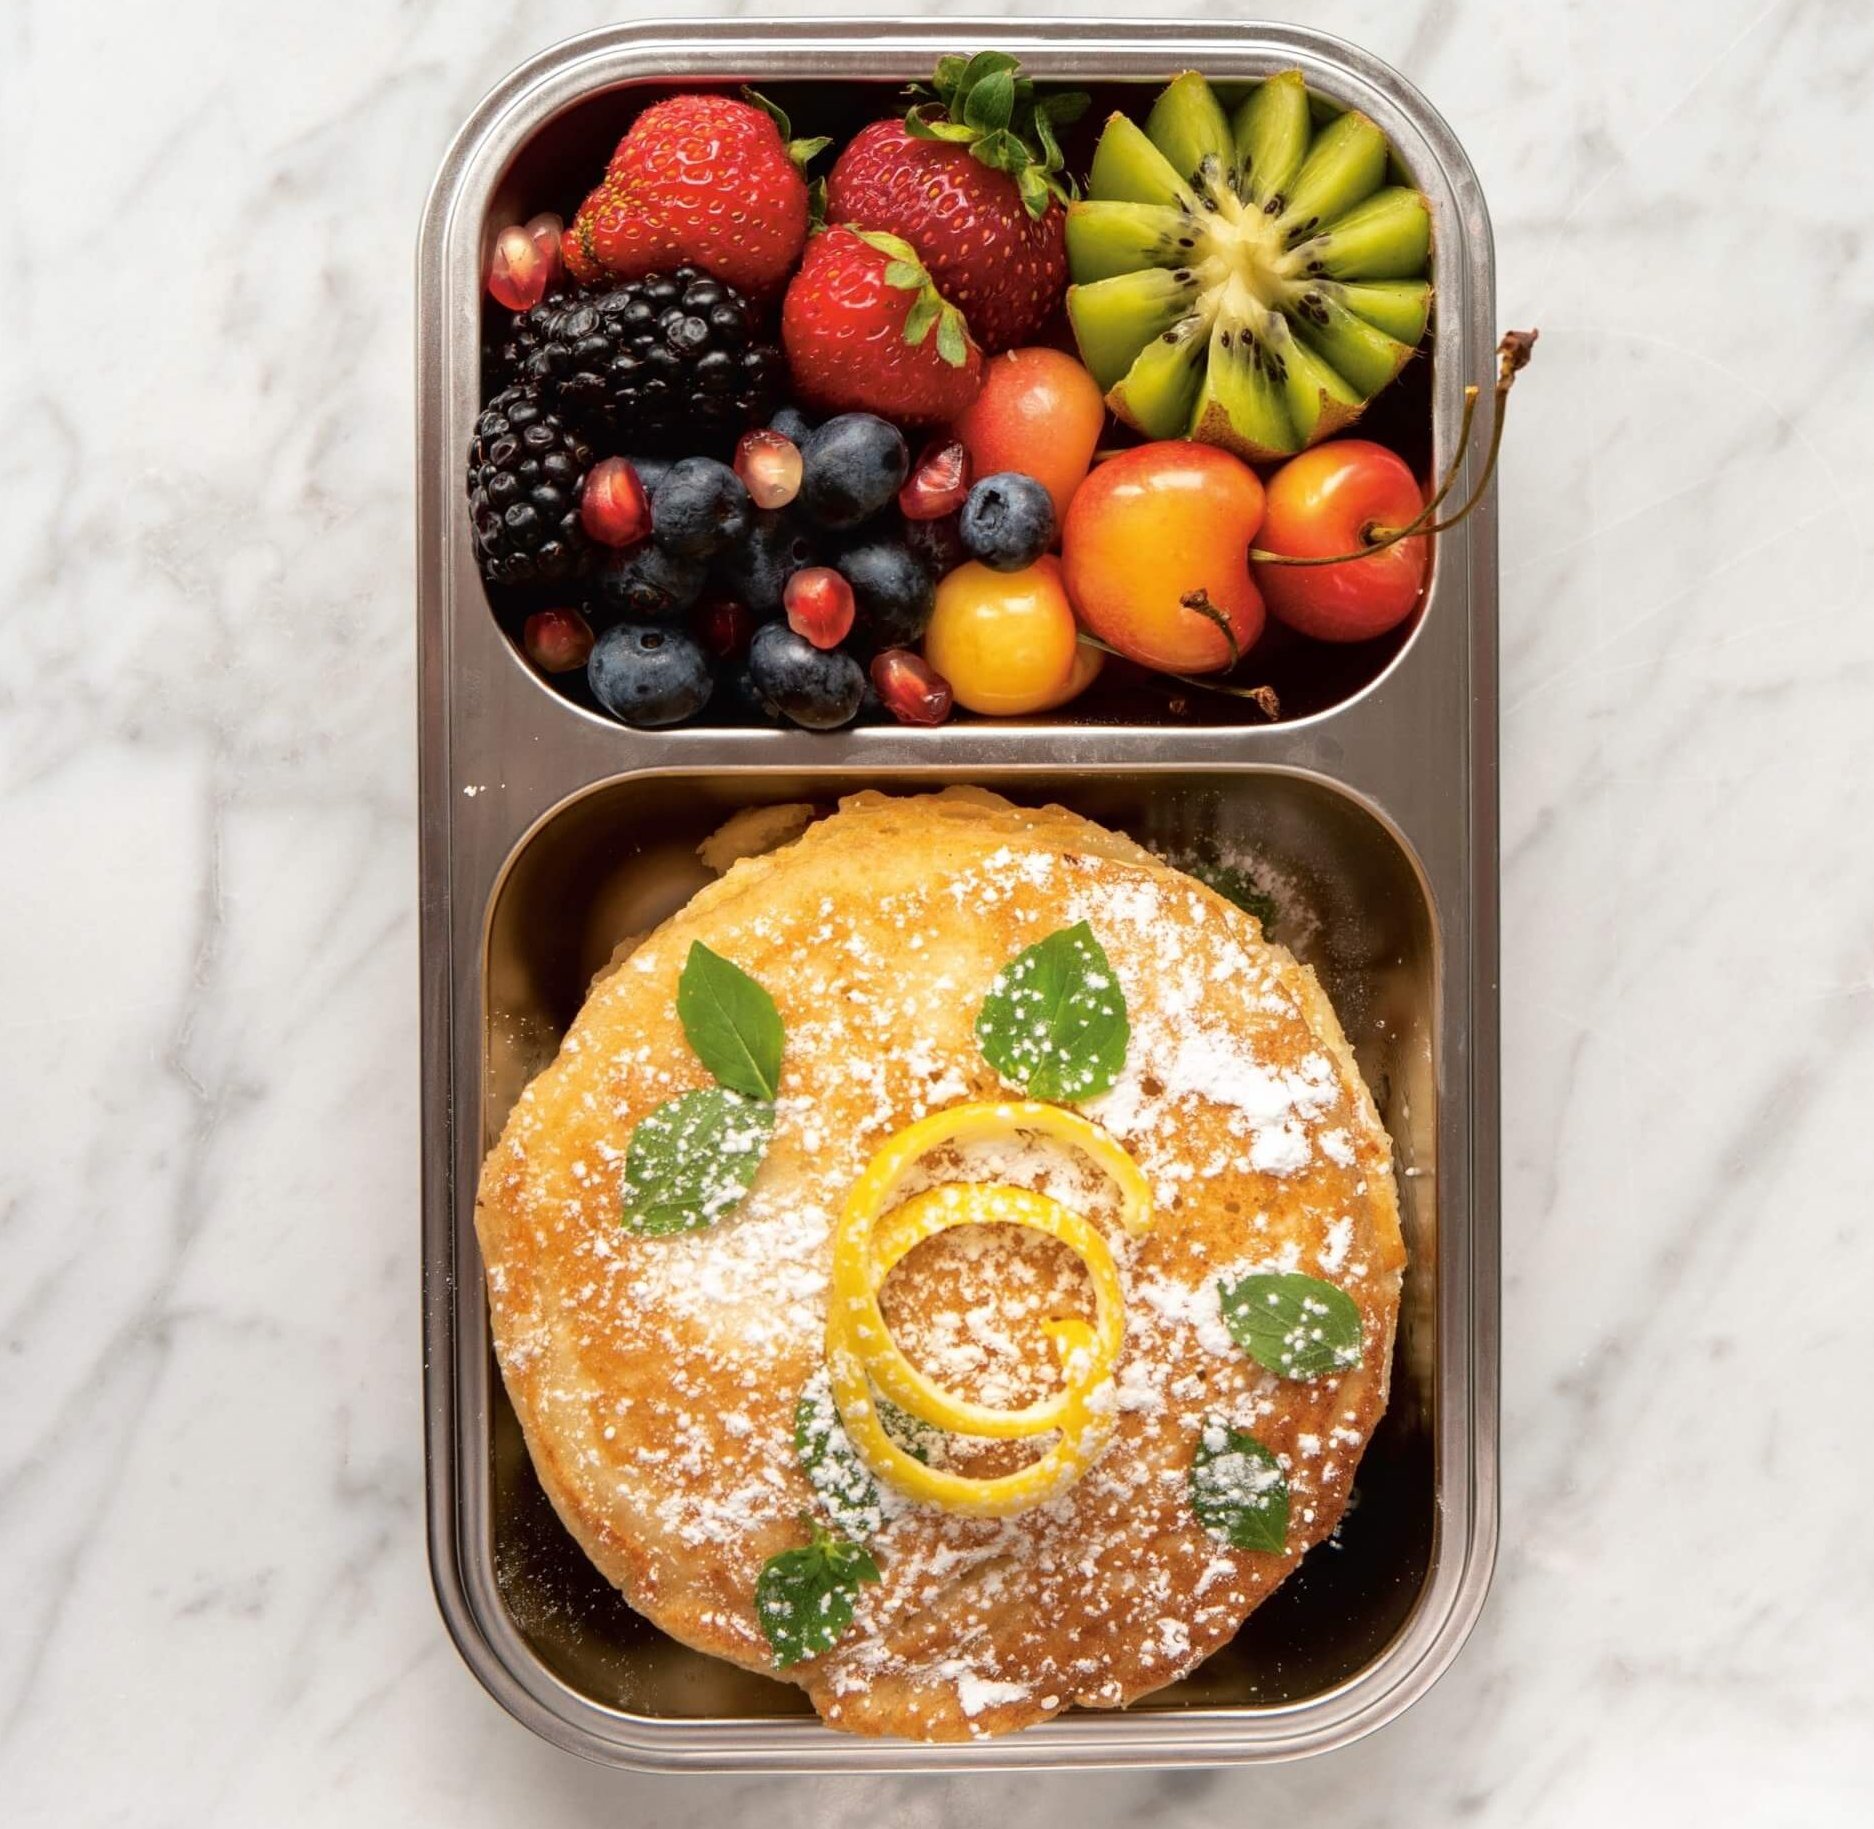 metal box with pancakes and fruit salad